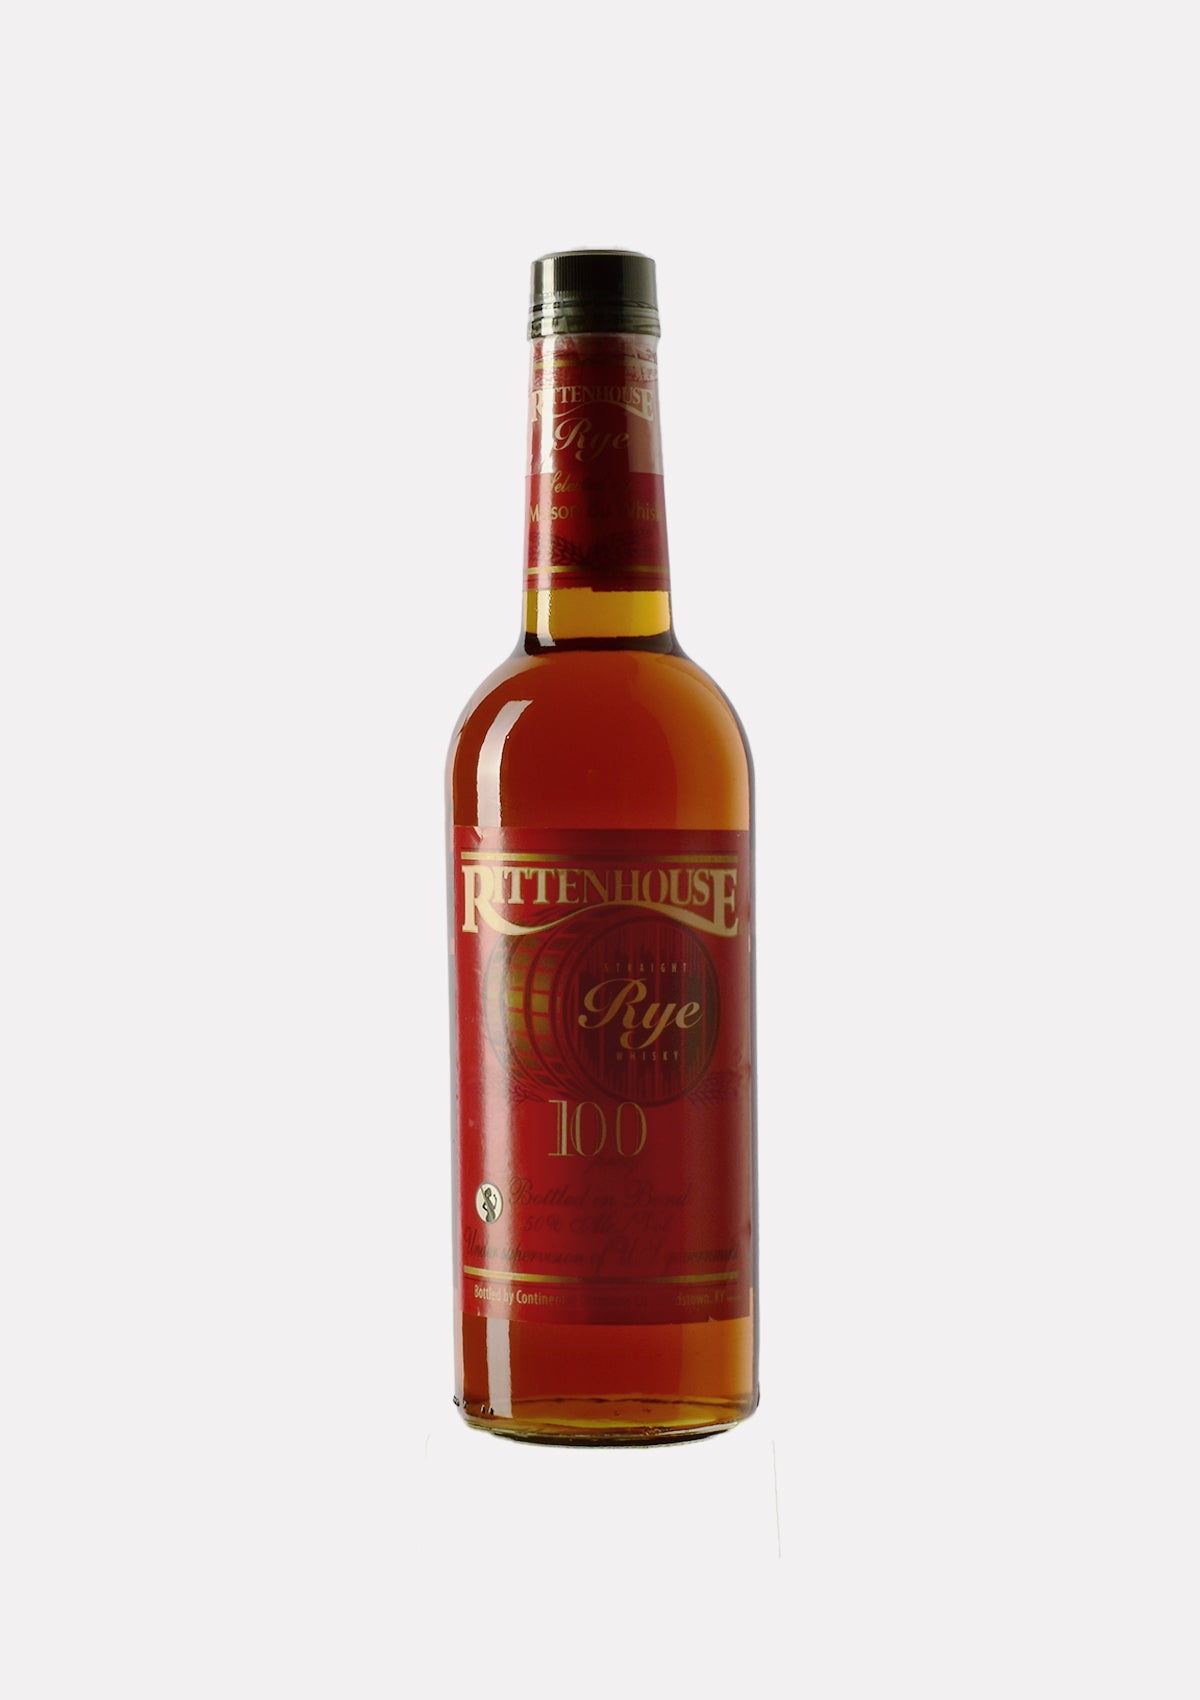 Rittenhouse Straight Rye Whisky 100 Proof